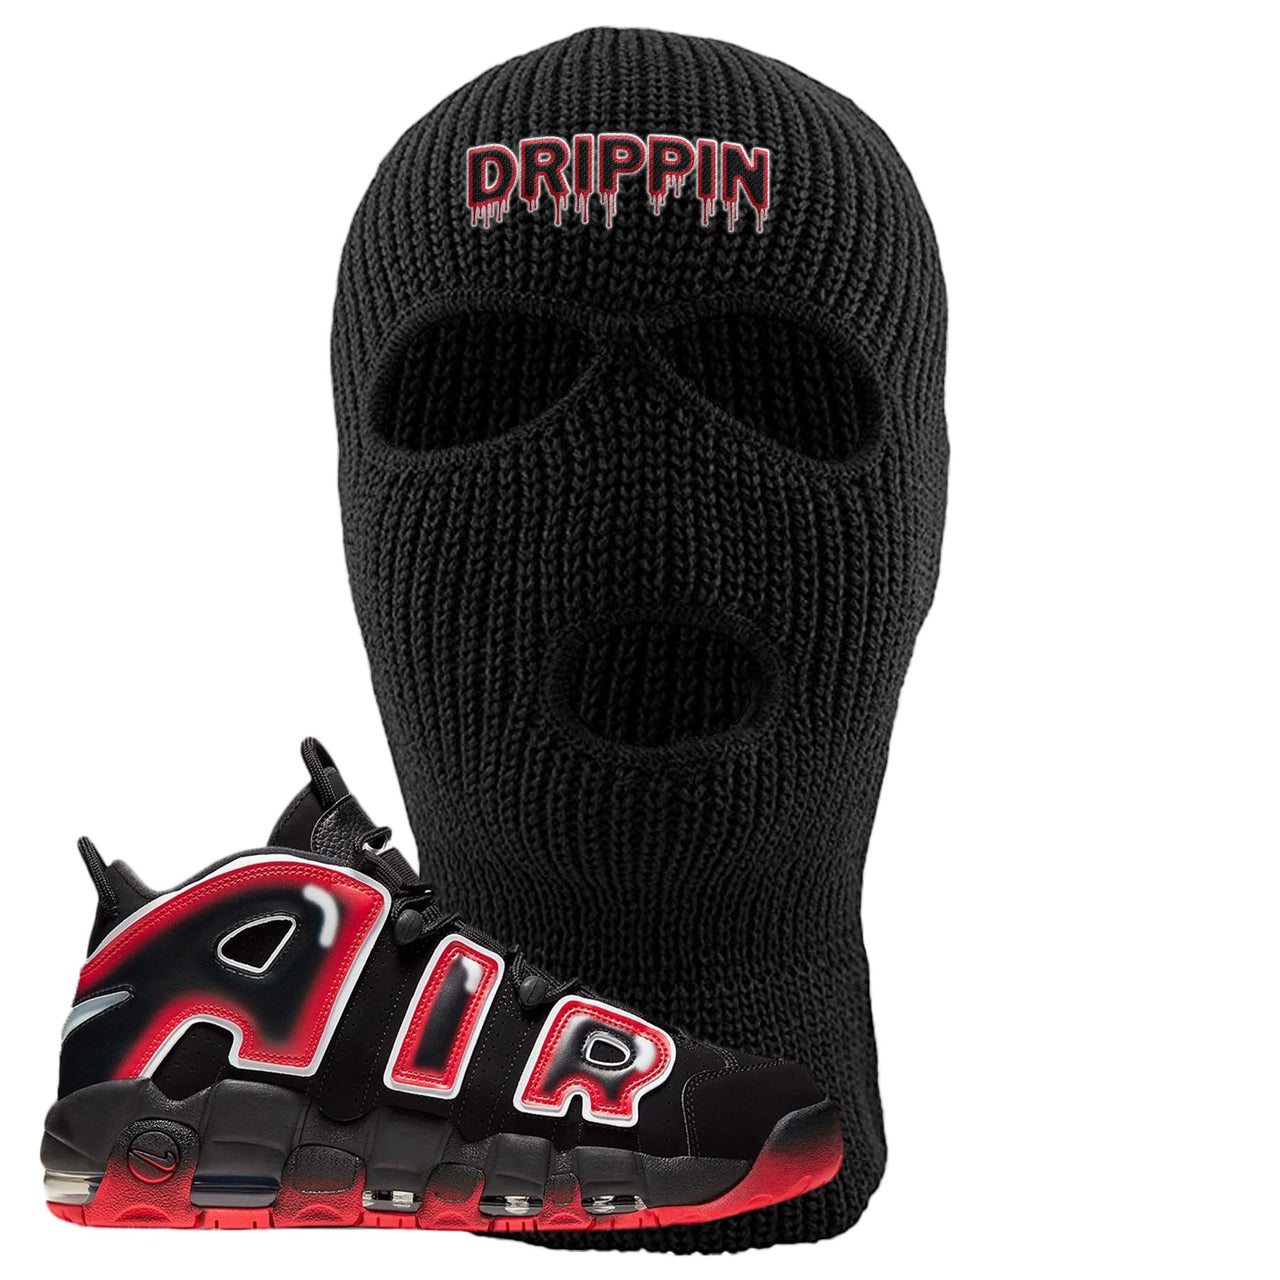 Air More Uptempo Laser Crimson Drippin Black Sneaker Hook Up Ski Mask